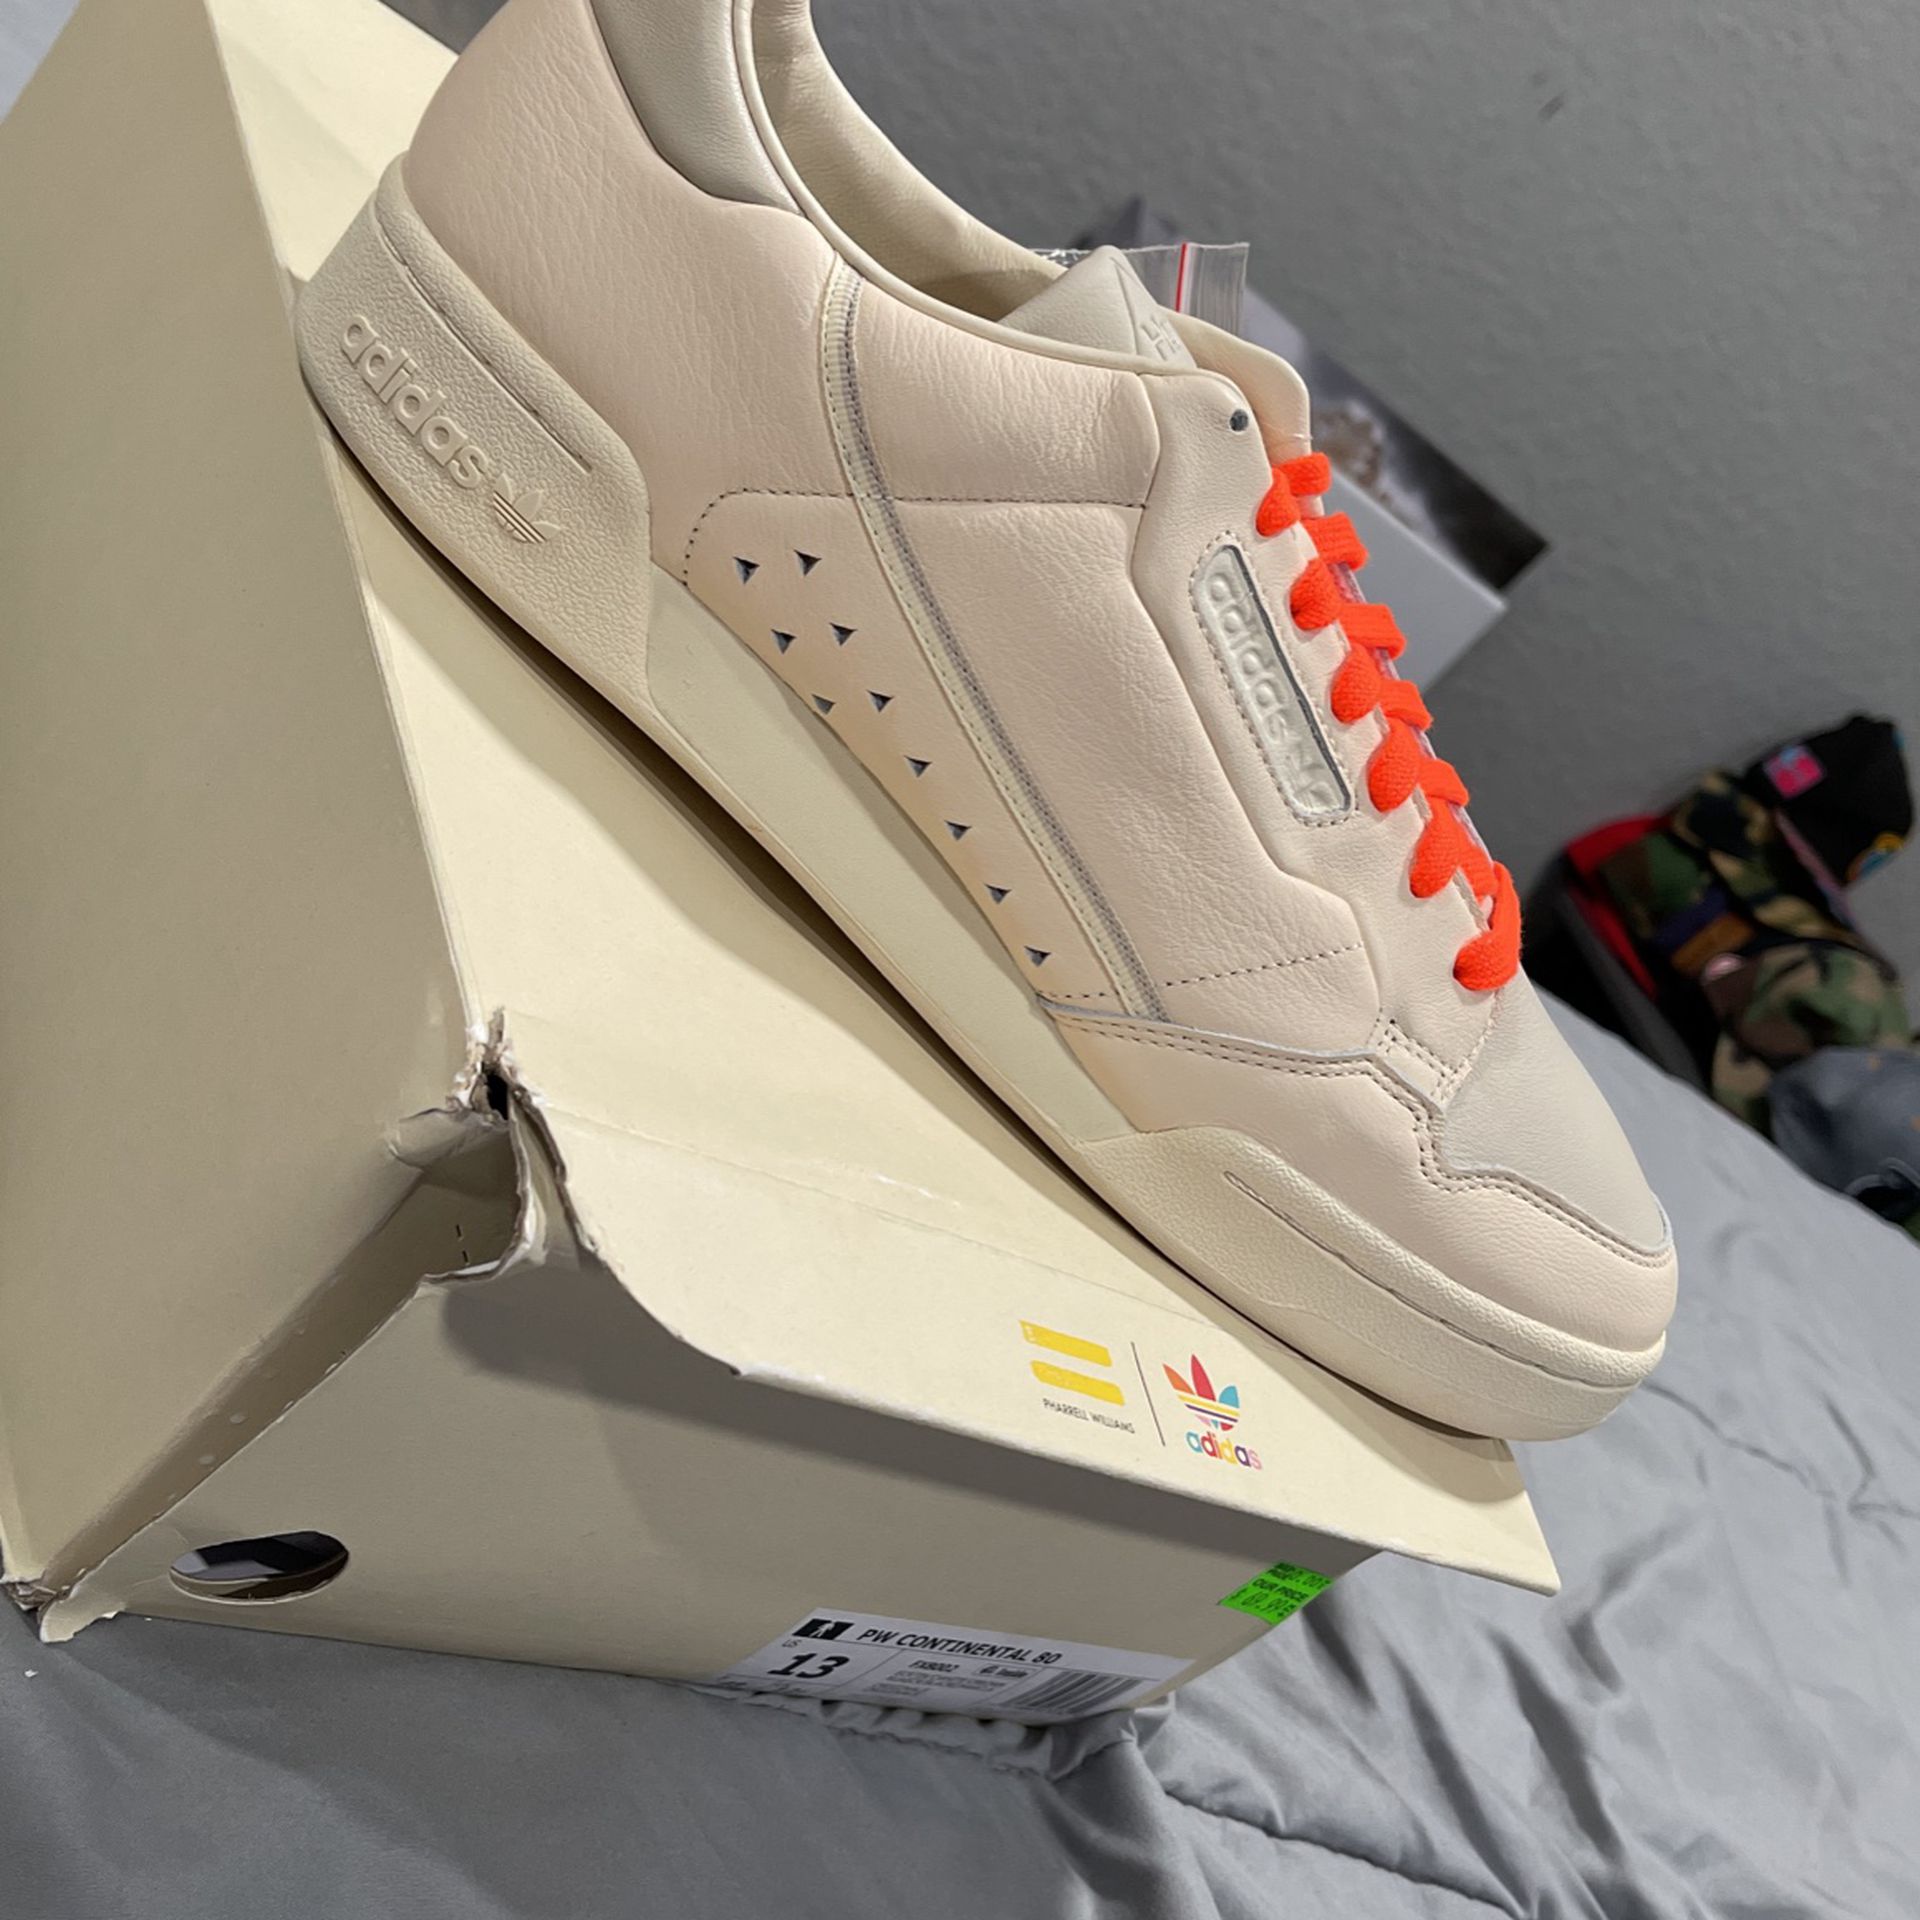 Adidas “continental 80” Size 13